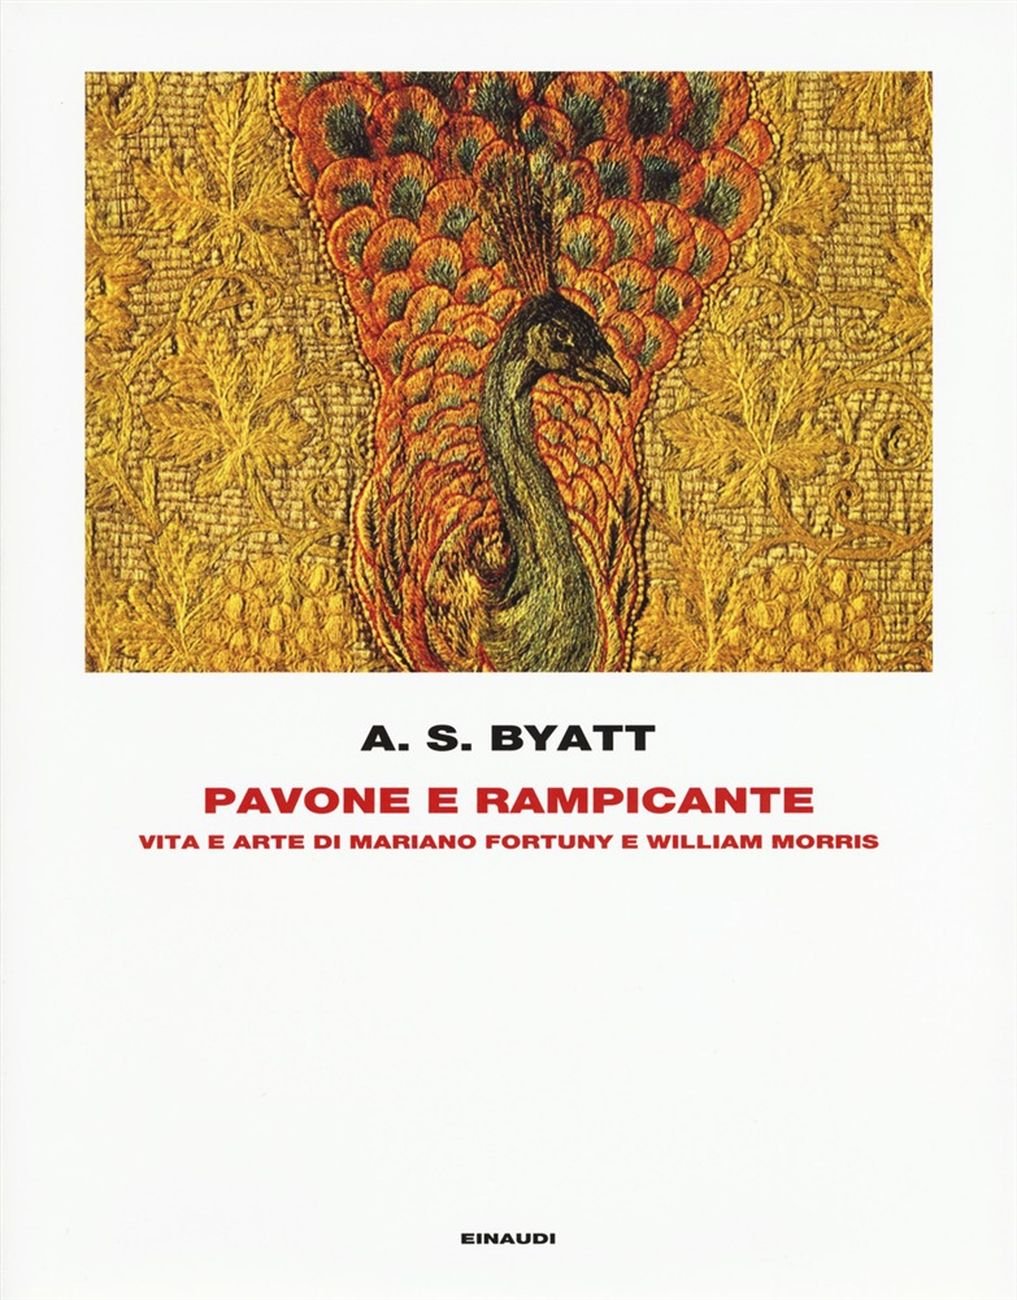 A. S. Byatt – Pavone e rampicante (Einaudi, 2017)